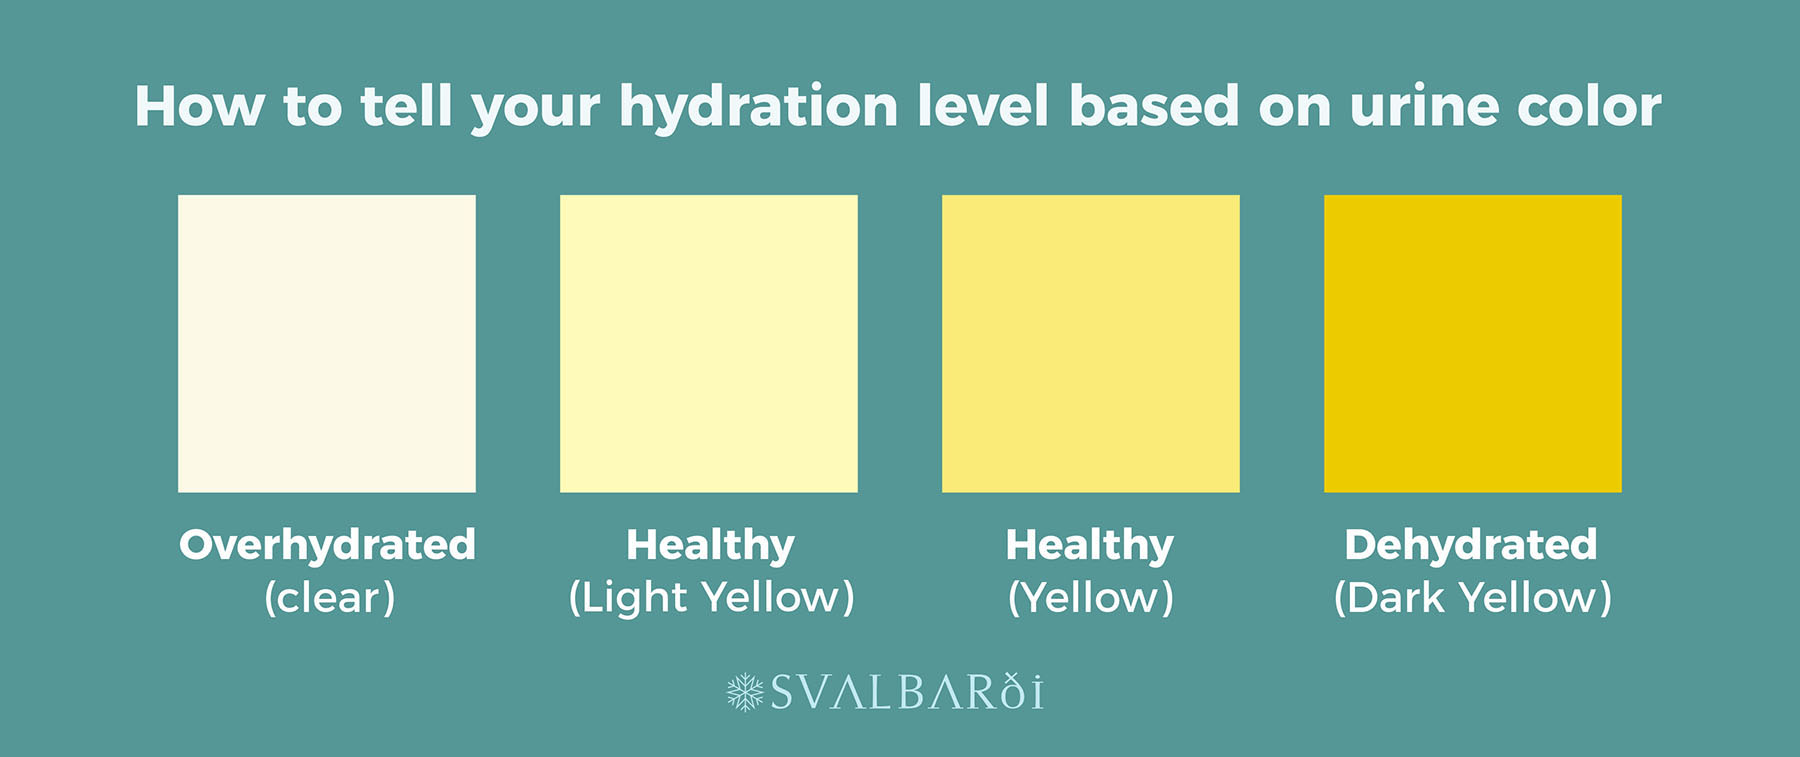 Hydration Level Based on Urine Color